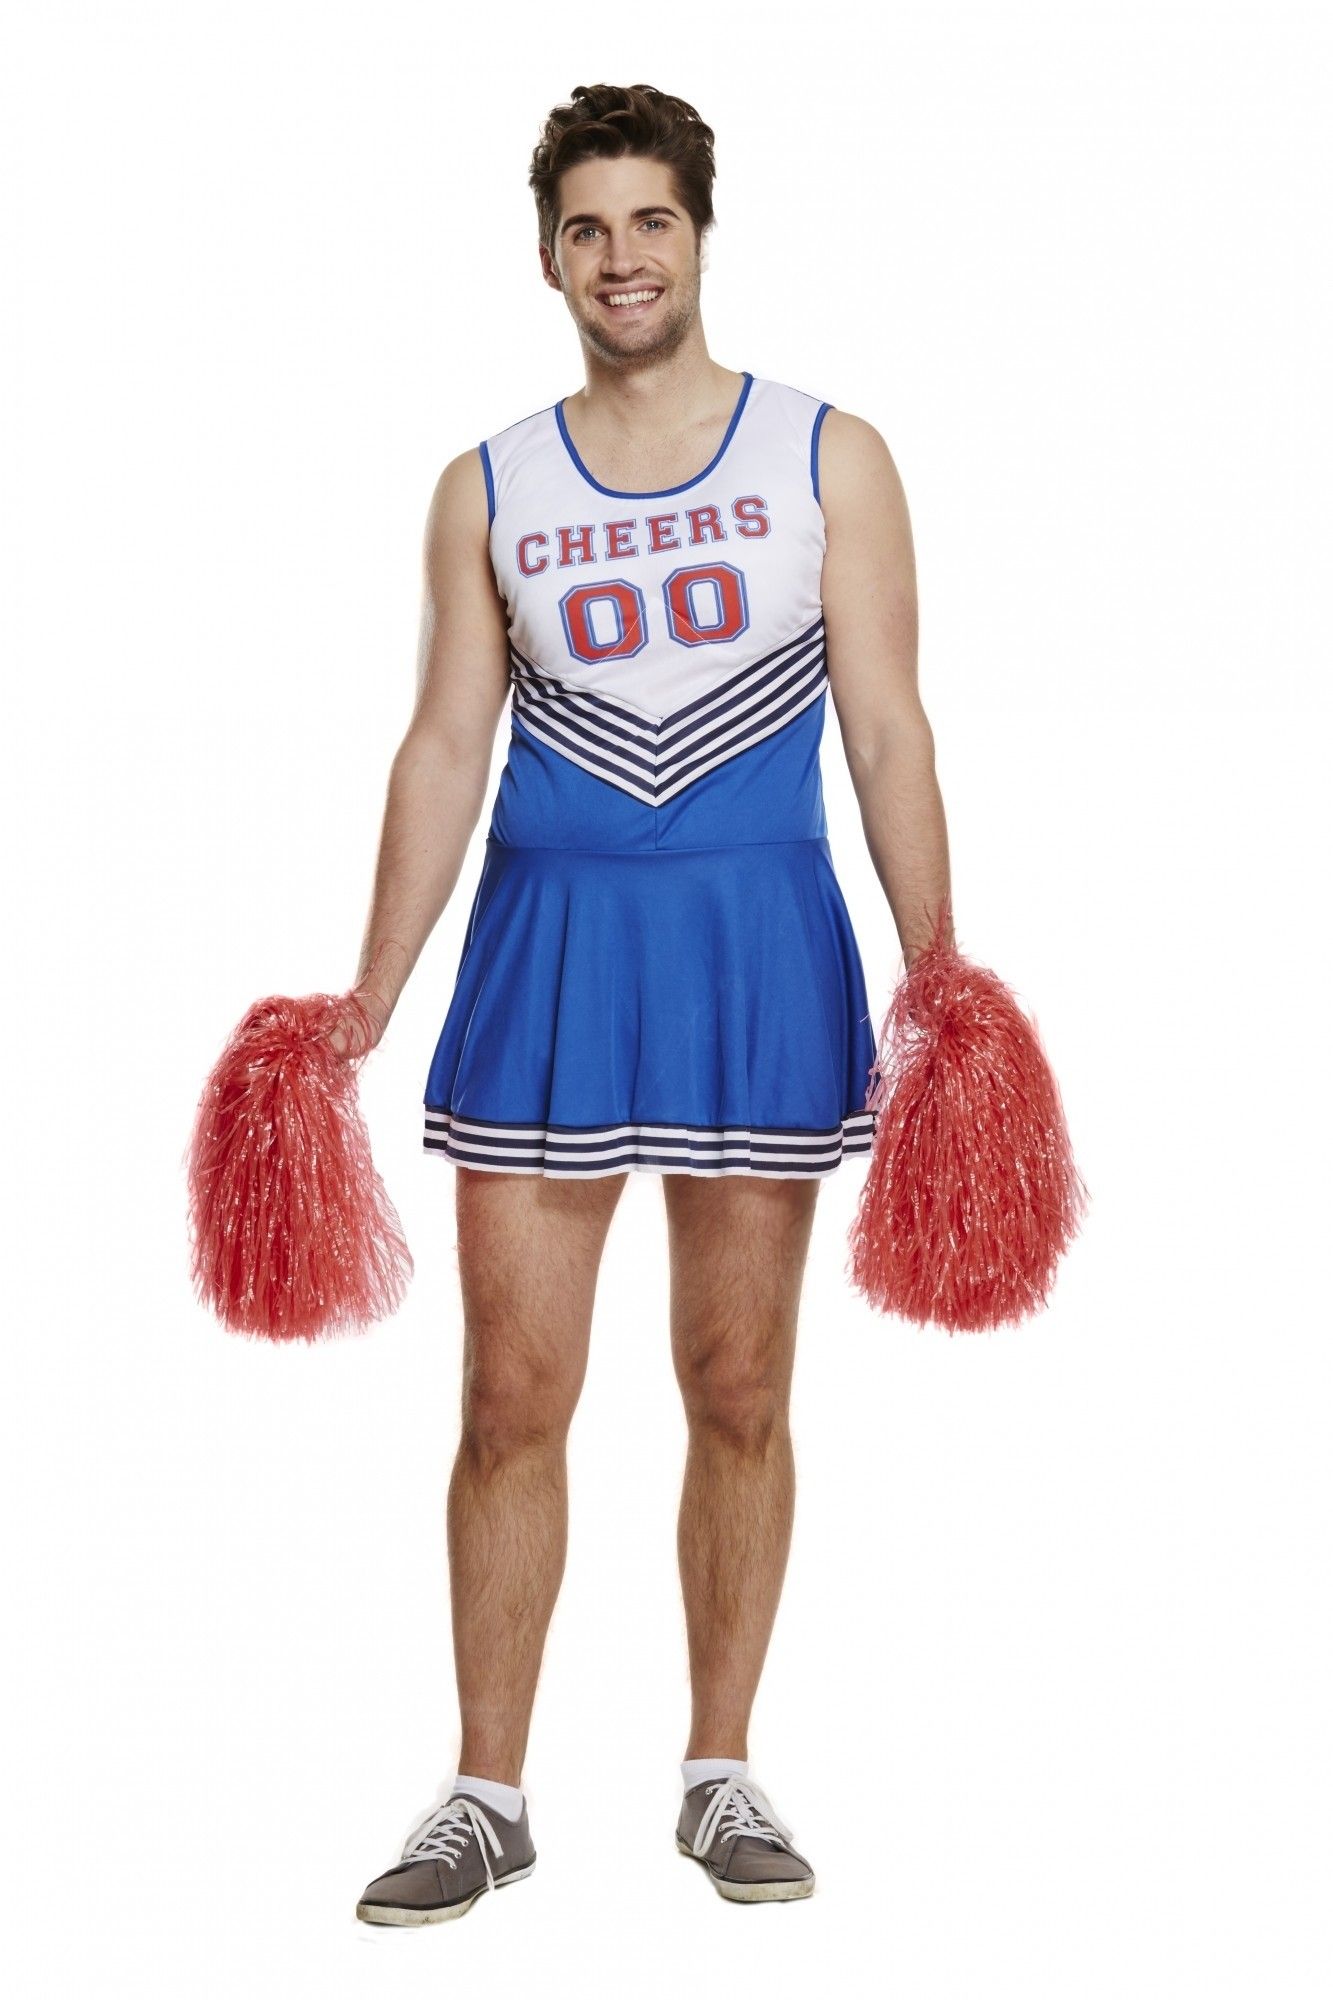 Uitgelezene Cheerleader kostuum mannen kopen? || Confettifeest.nl VI-56